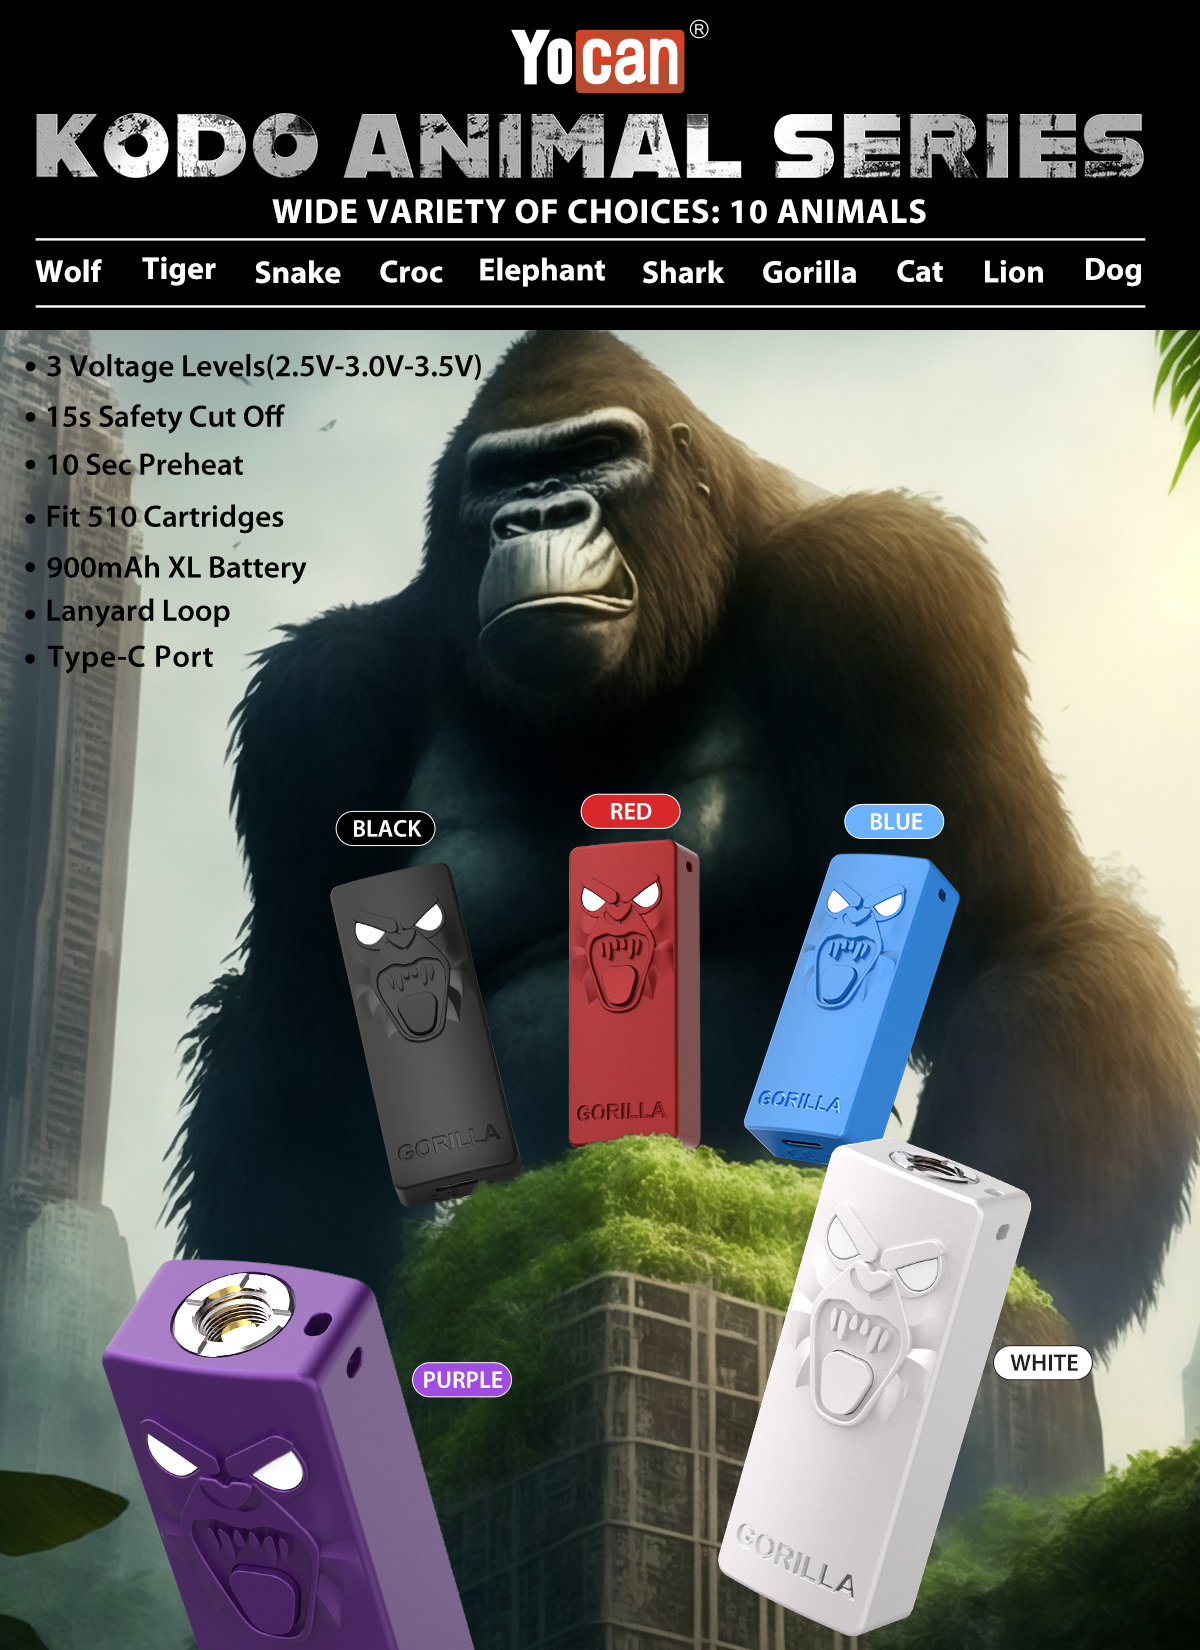 Yocan Kodo Animal series CBD battery features